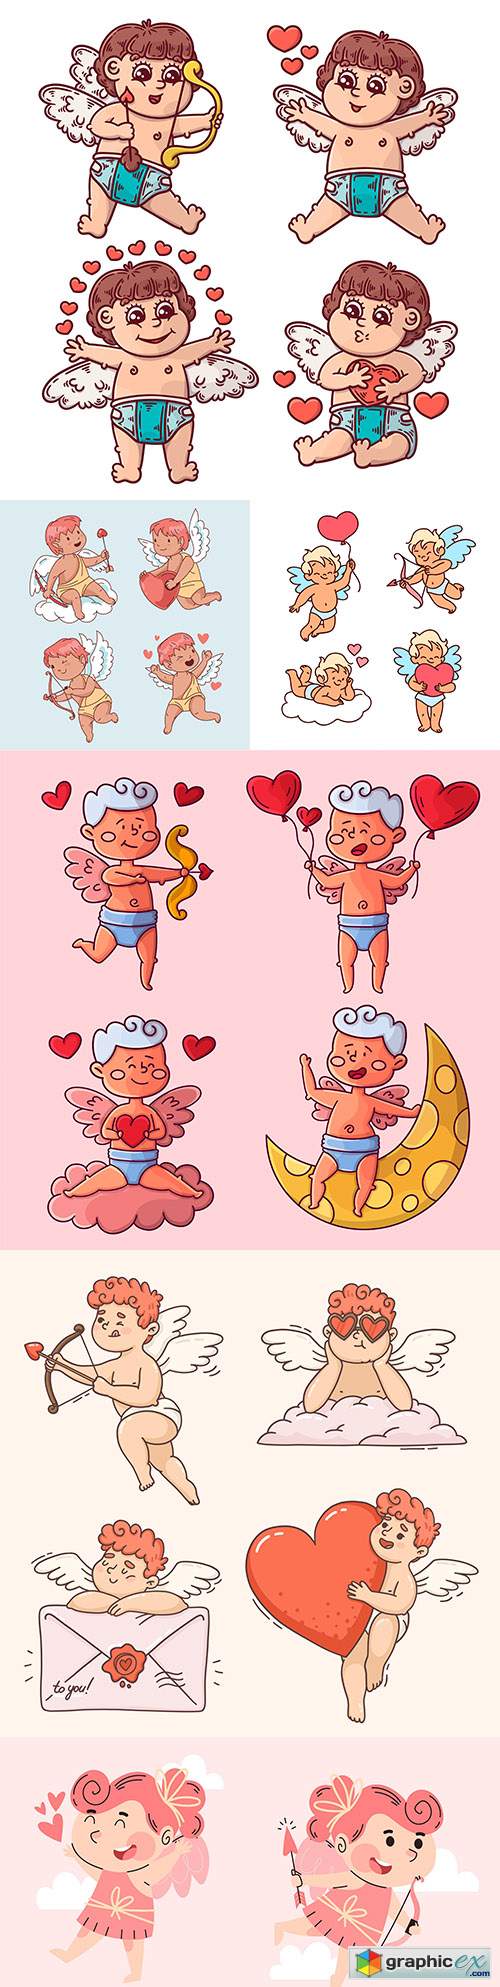  St. Valentine's day romantic cartoon cupid collection 5 